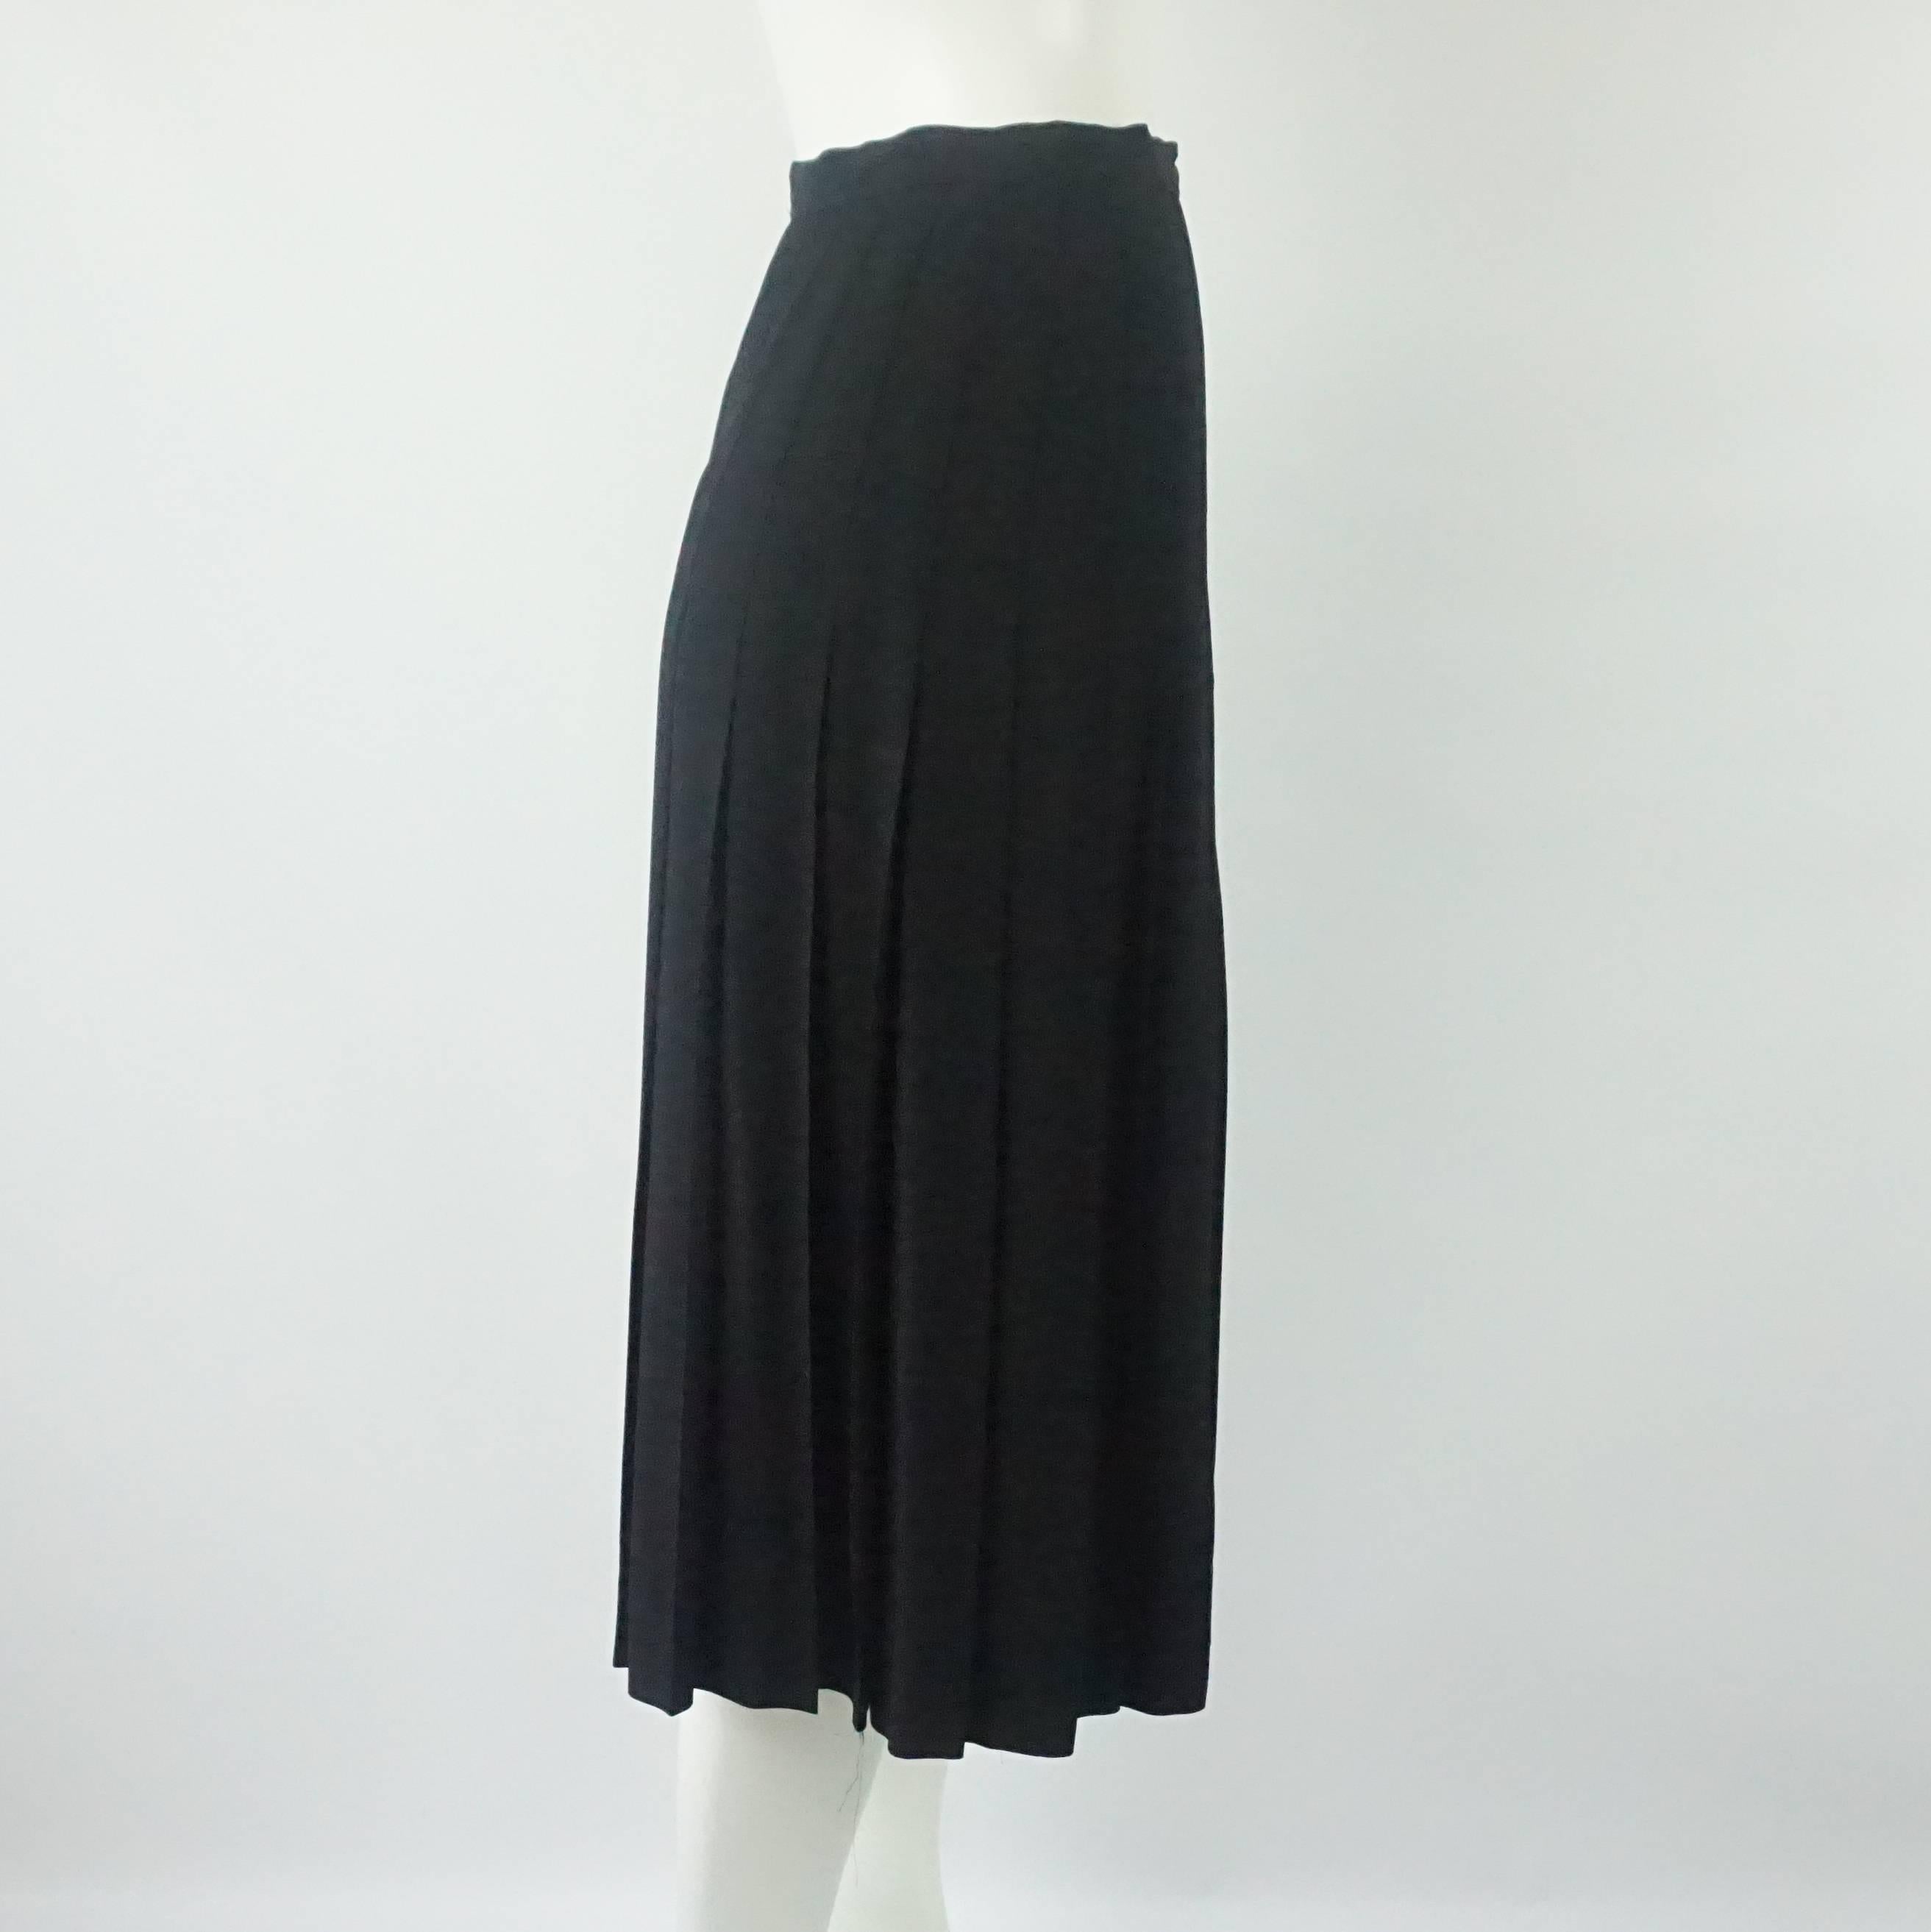 Chanel Vintage Black Silk Pleated Skirt - 38. This vintage Chanel skirt is black silk and has a gold button. It is flowing and pleated. This skirt is in excellent condition. Size 38. 

Measurements
Waist: 26.5